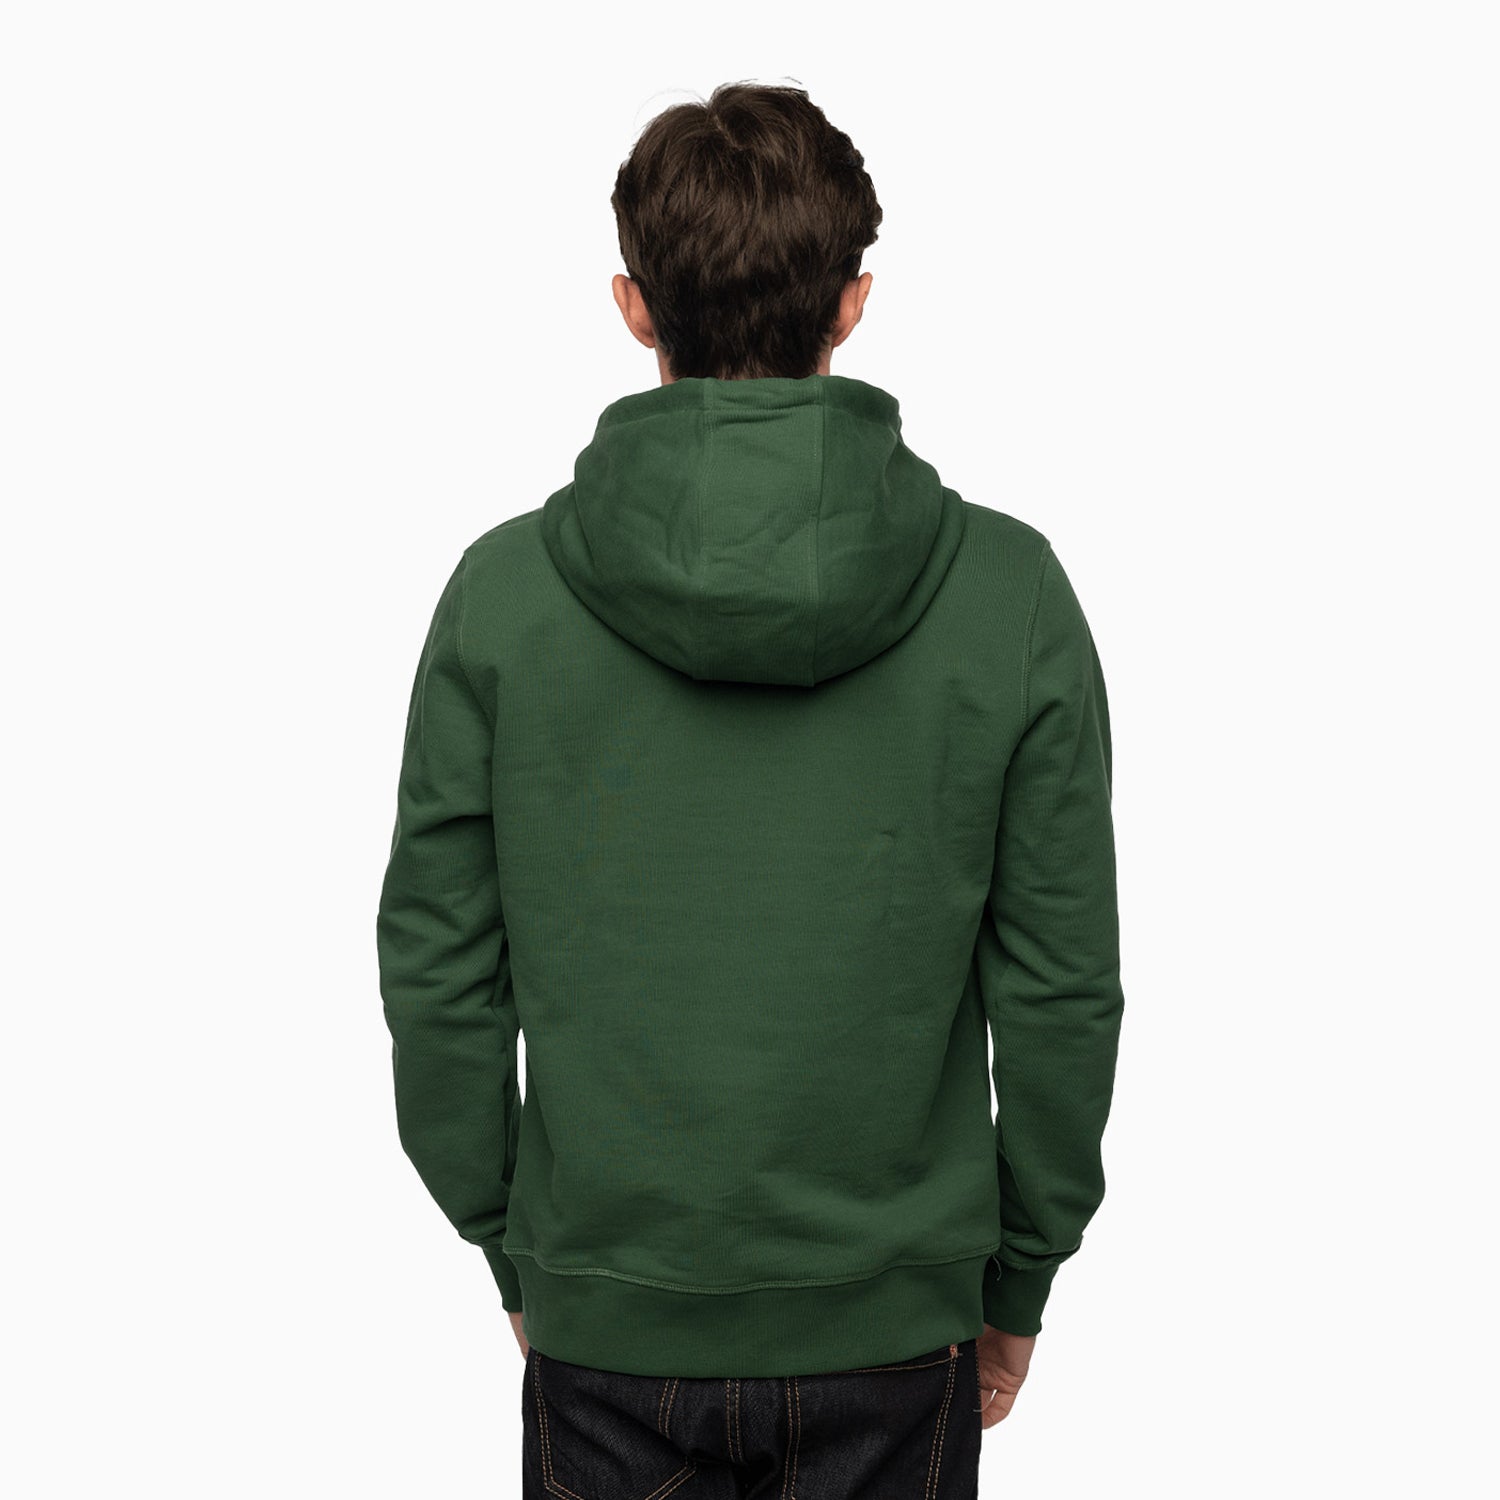 inimigo-mens-embroidery-fleece-pull-over-hoodie-ils5122-421